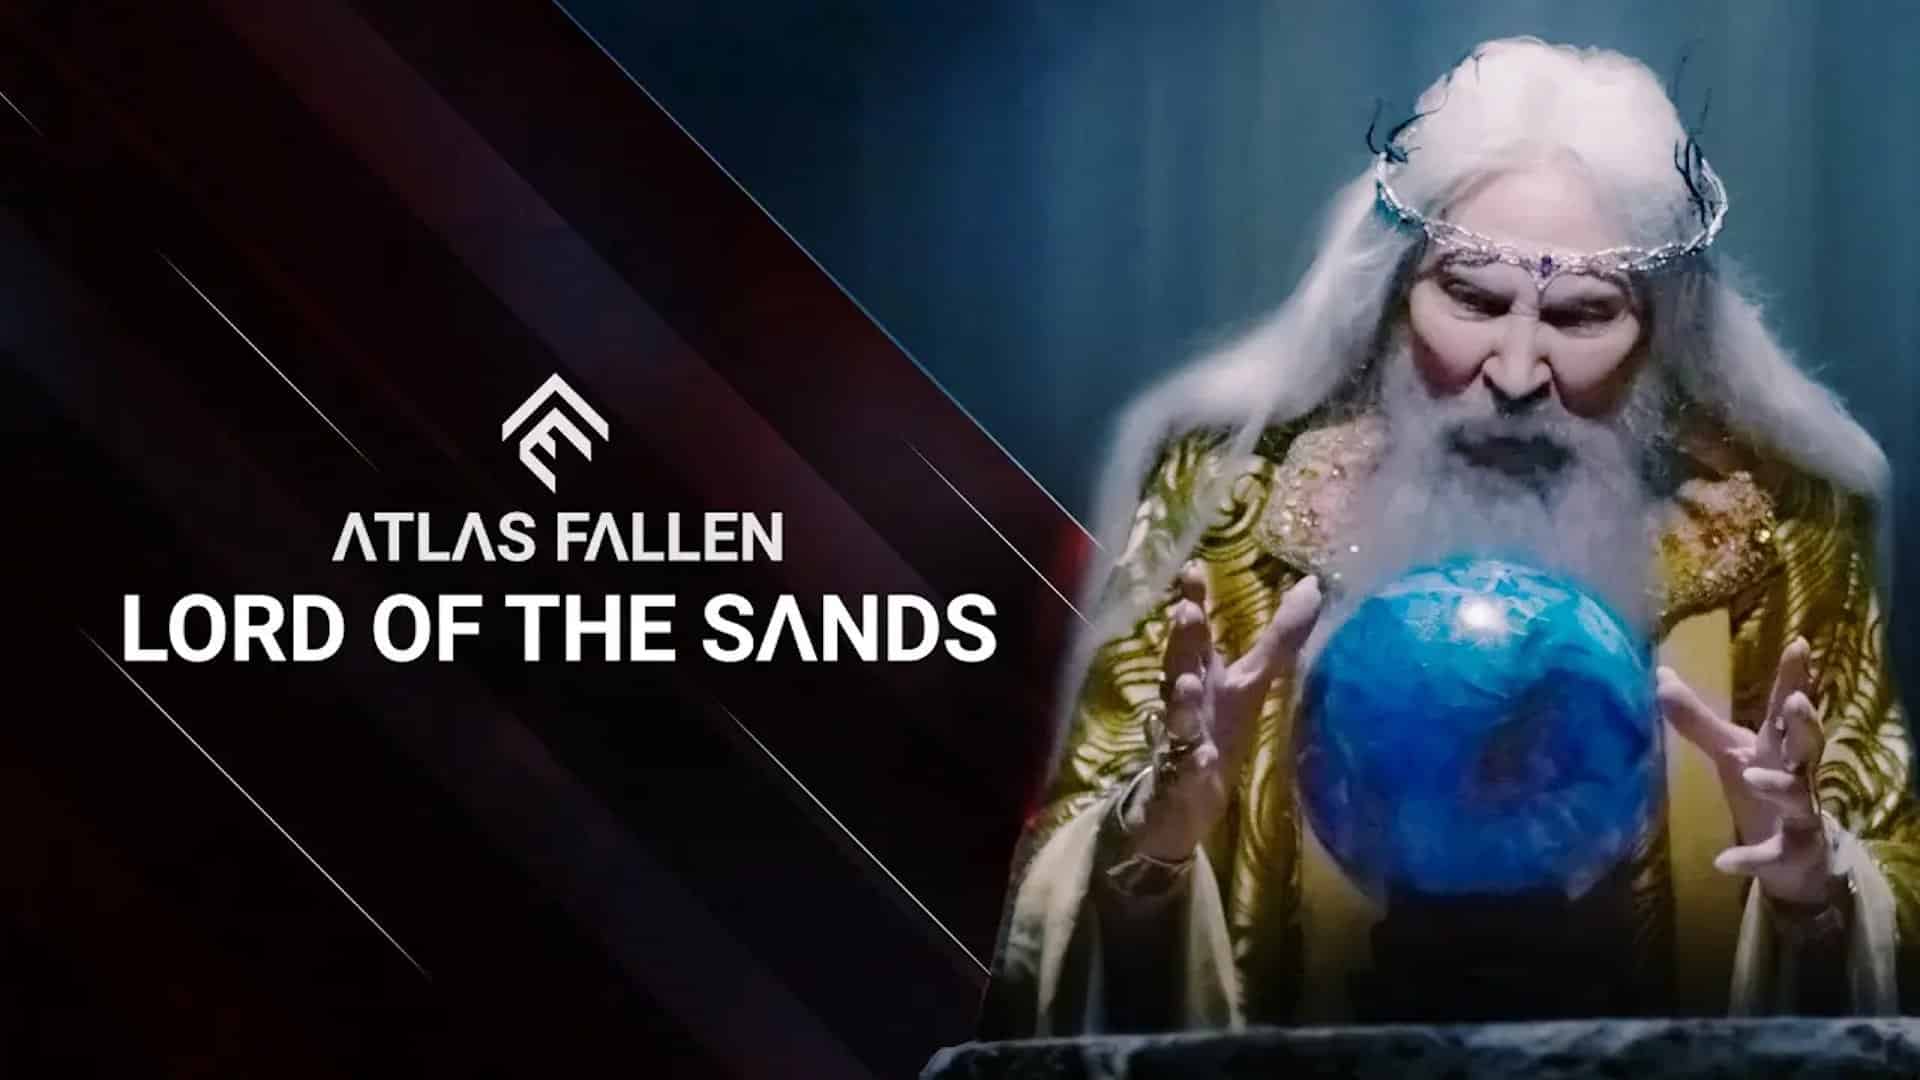 Atlas Fallen: The Movie